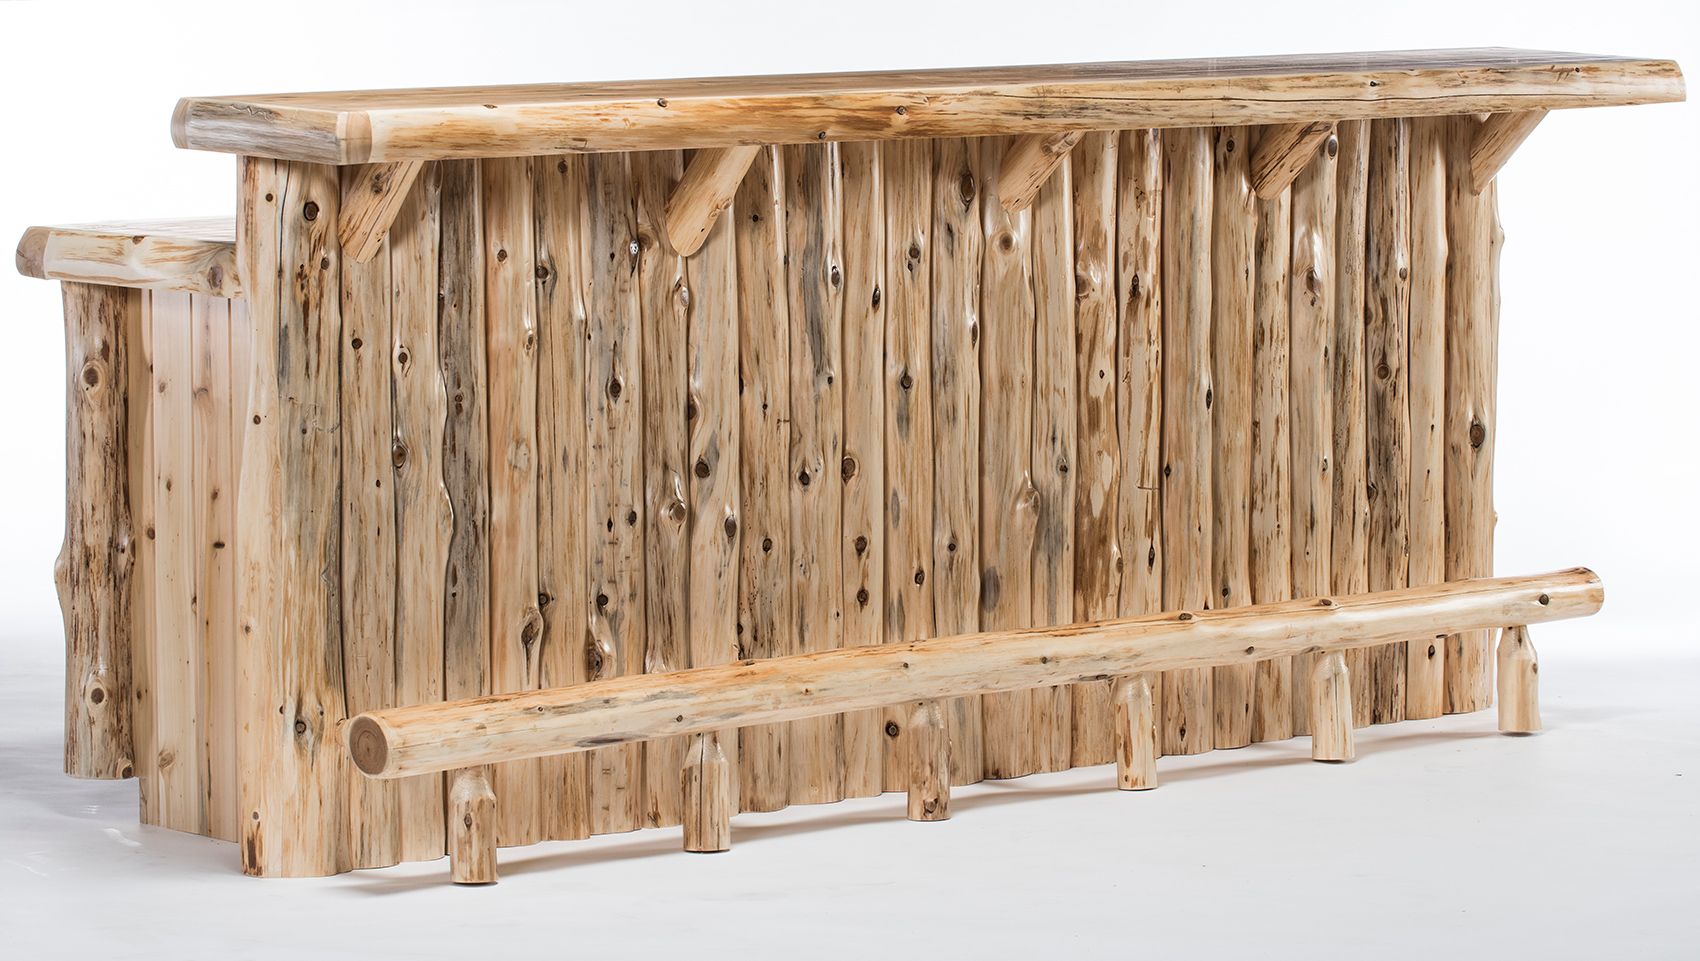 Cedar Log Bar made from real Wood